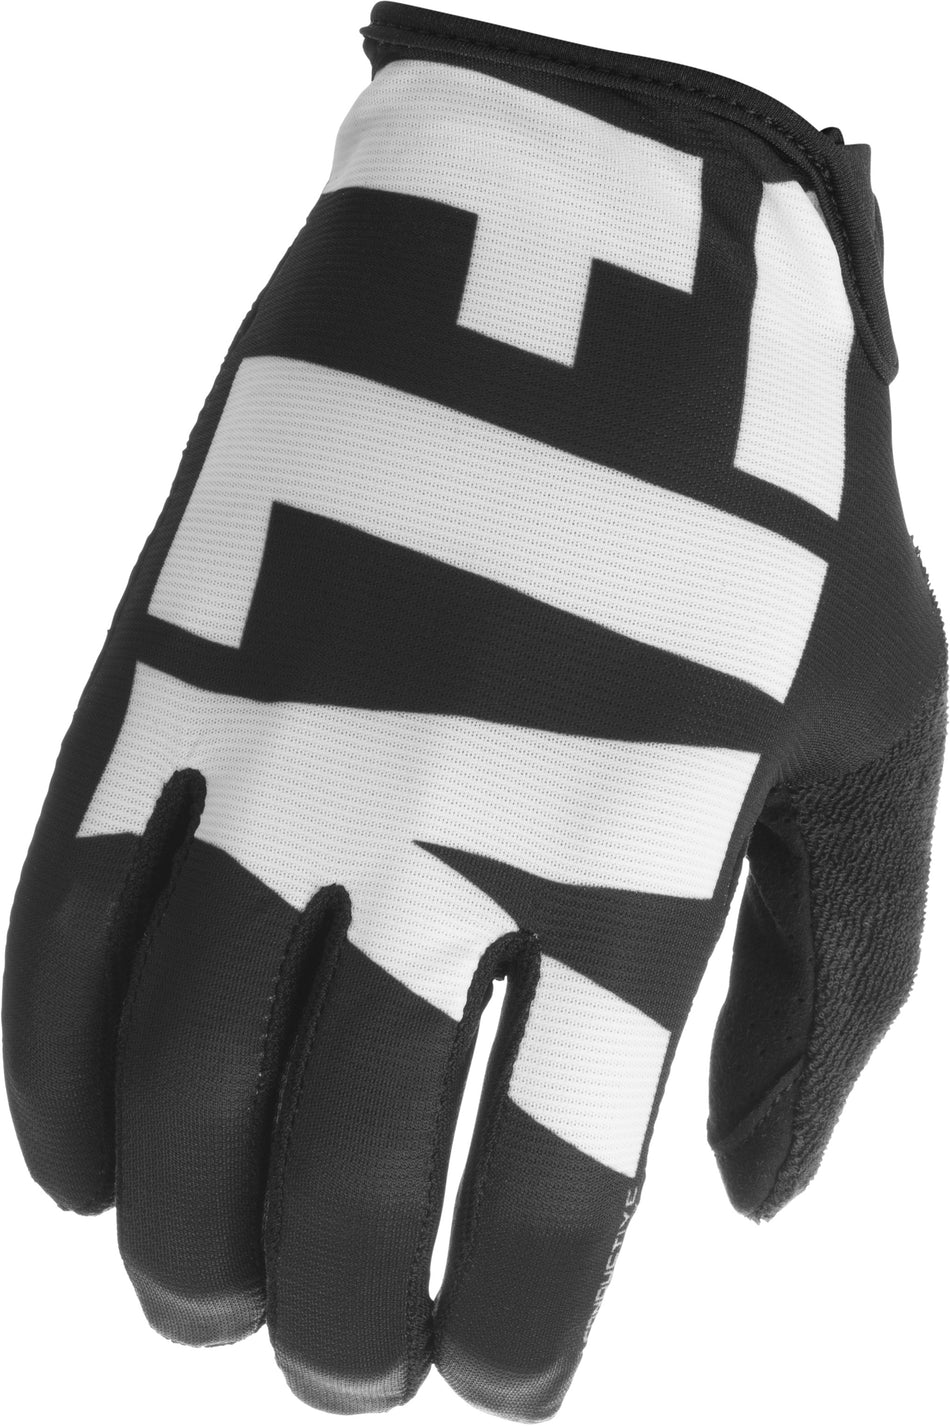 FLY RACING Media Gloves Black/White Sz 13 350-10413